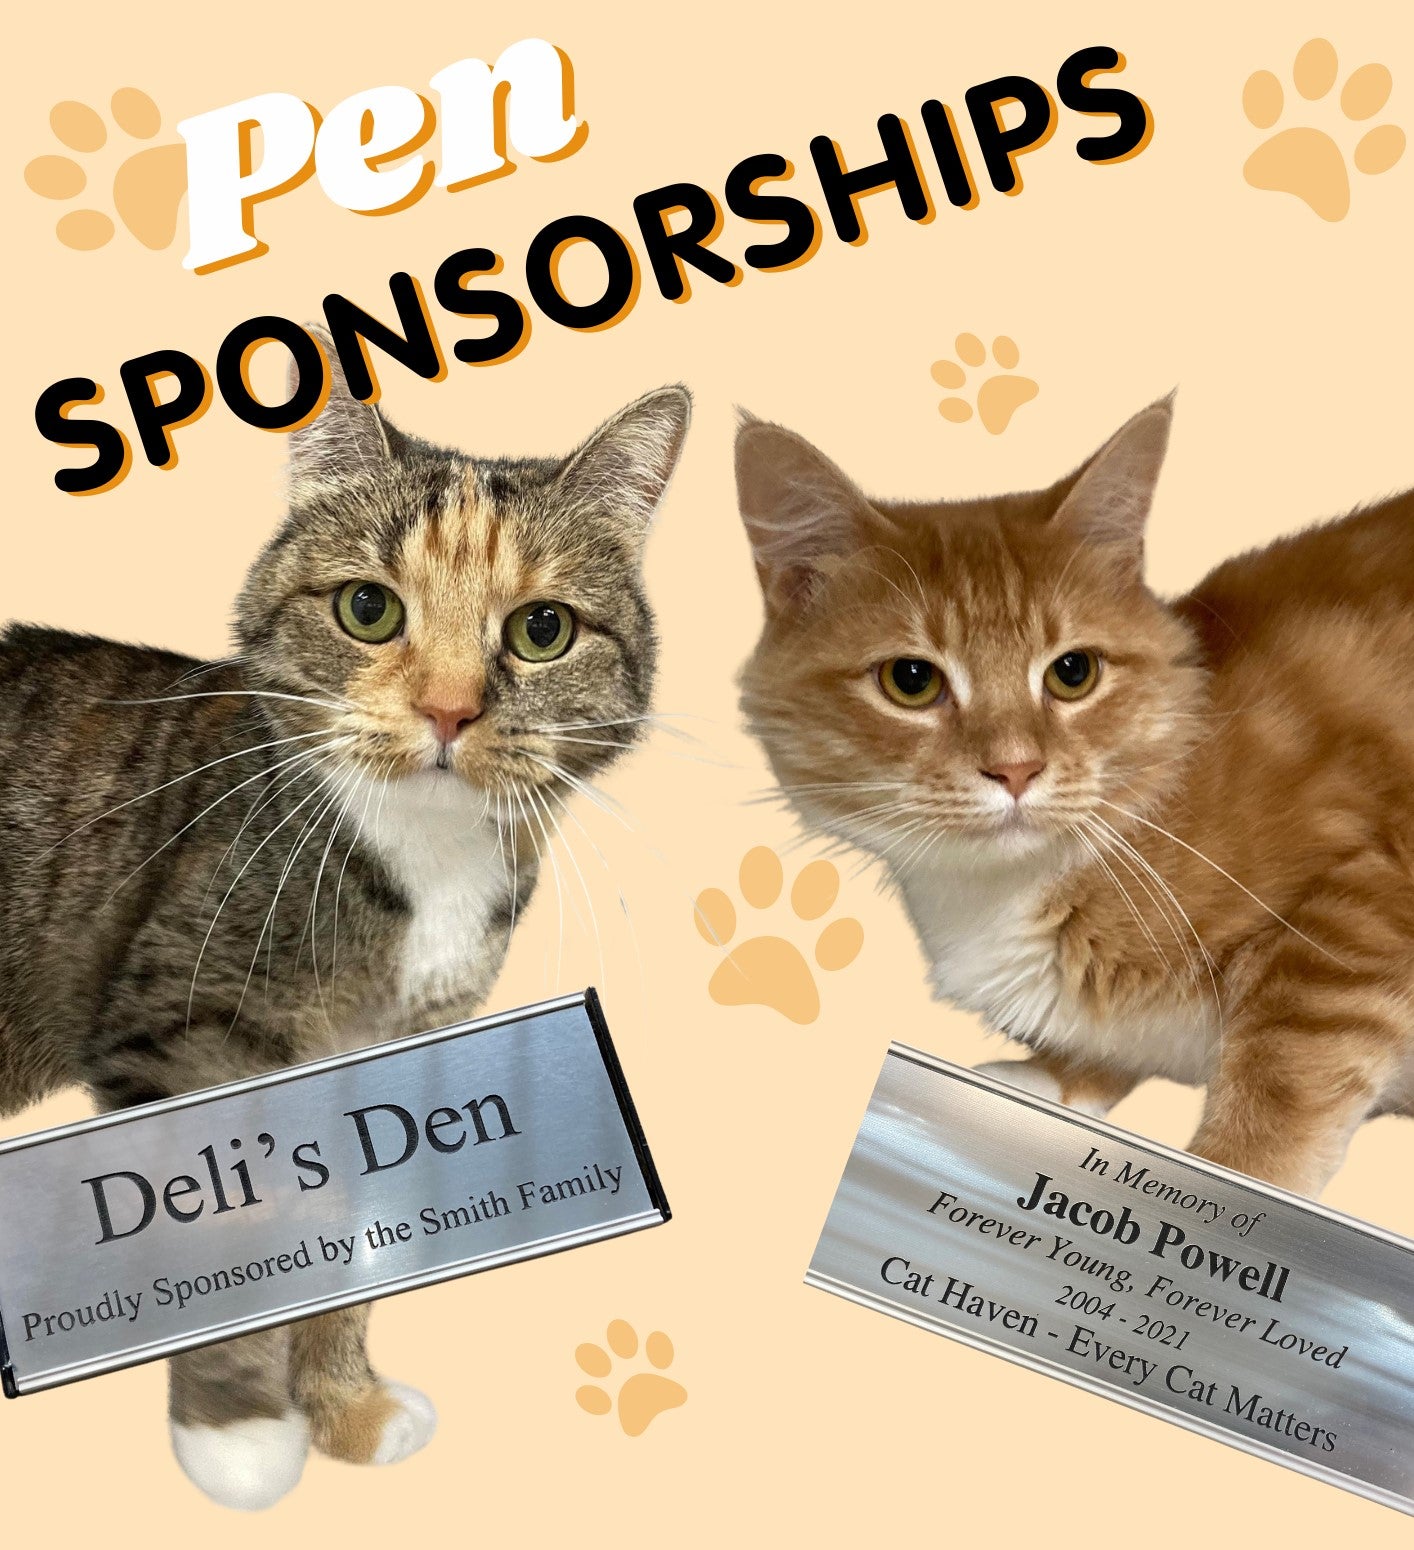 Cat Haven Cat Pen Sponsorship